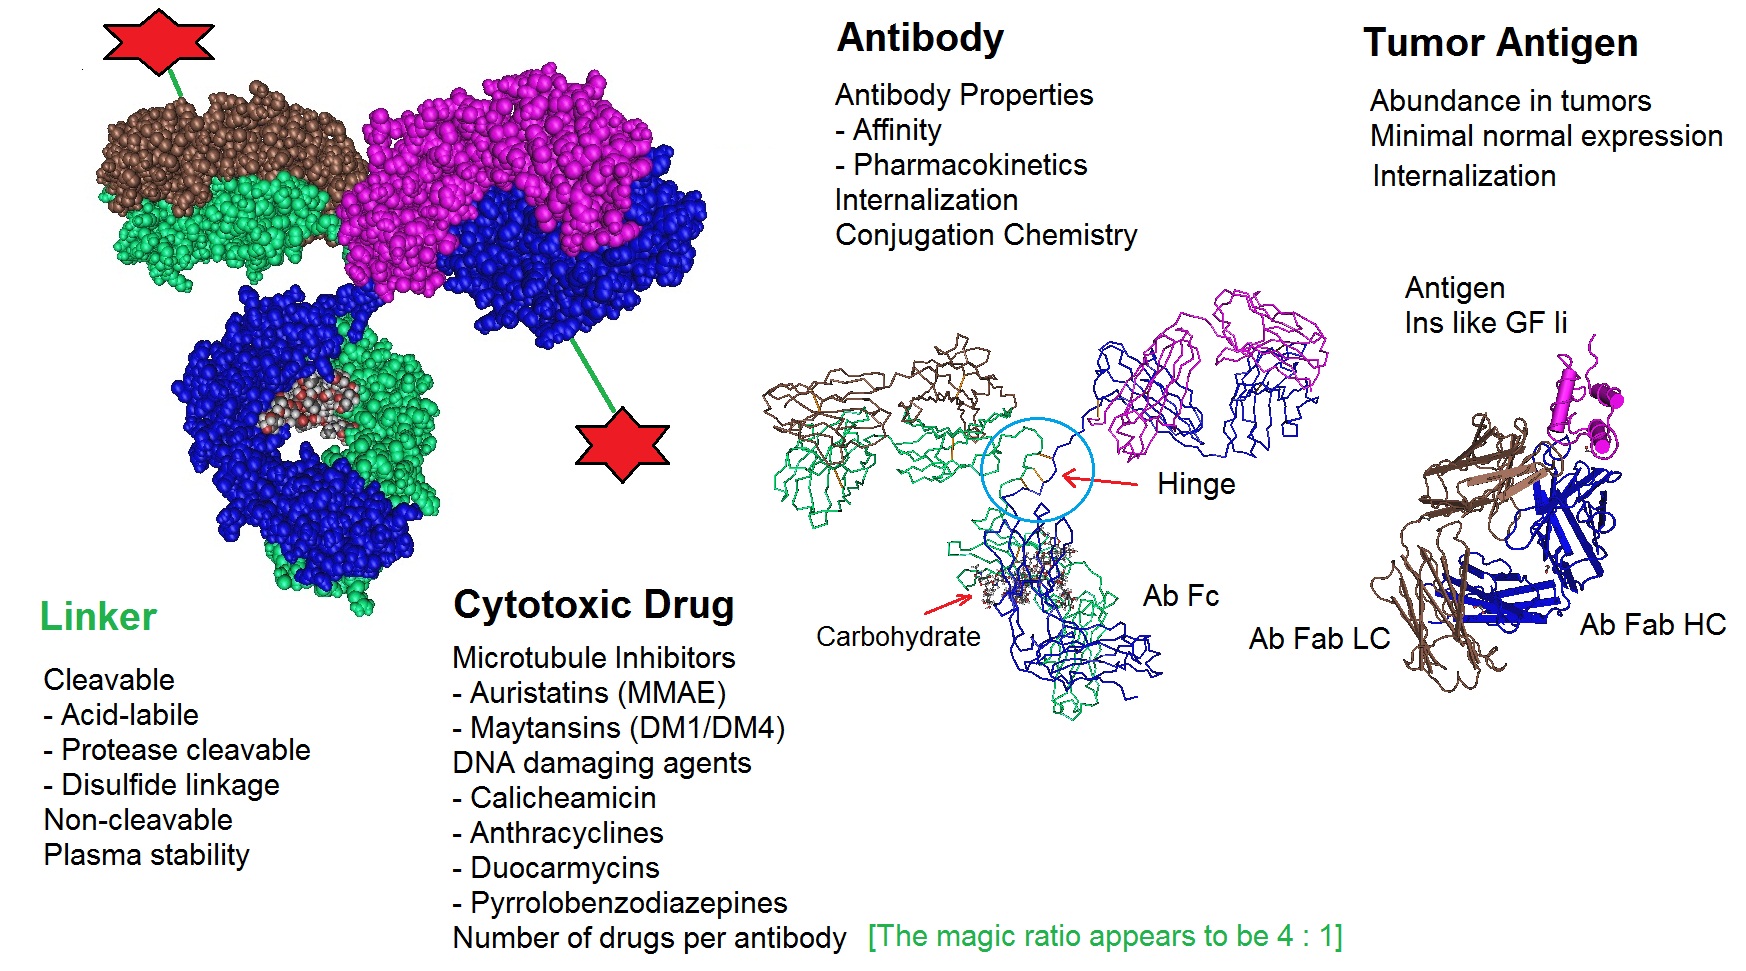 NanoHybrids - Antibody Conjugation for Gold Nanoparticles